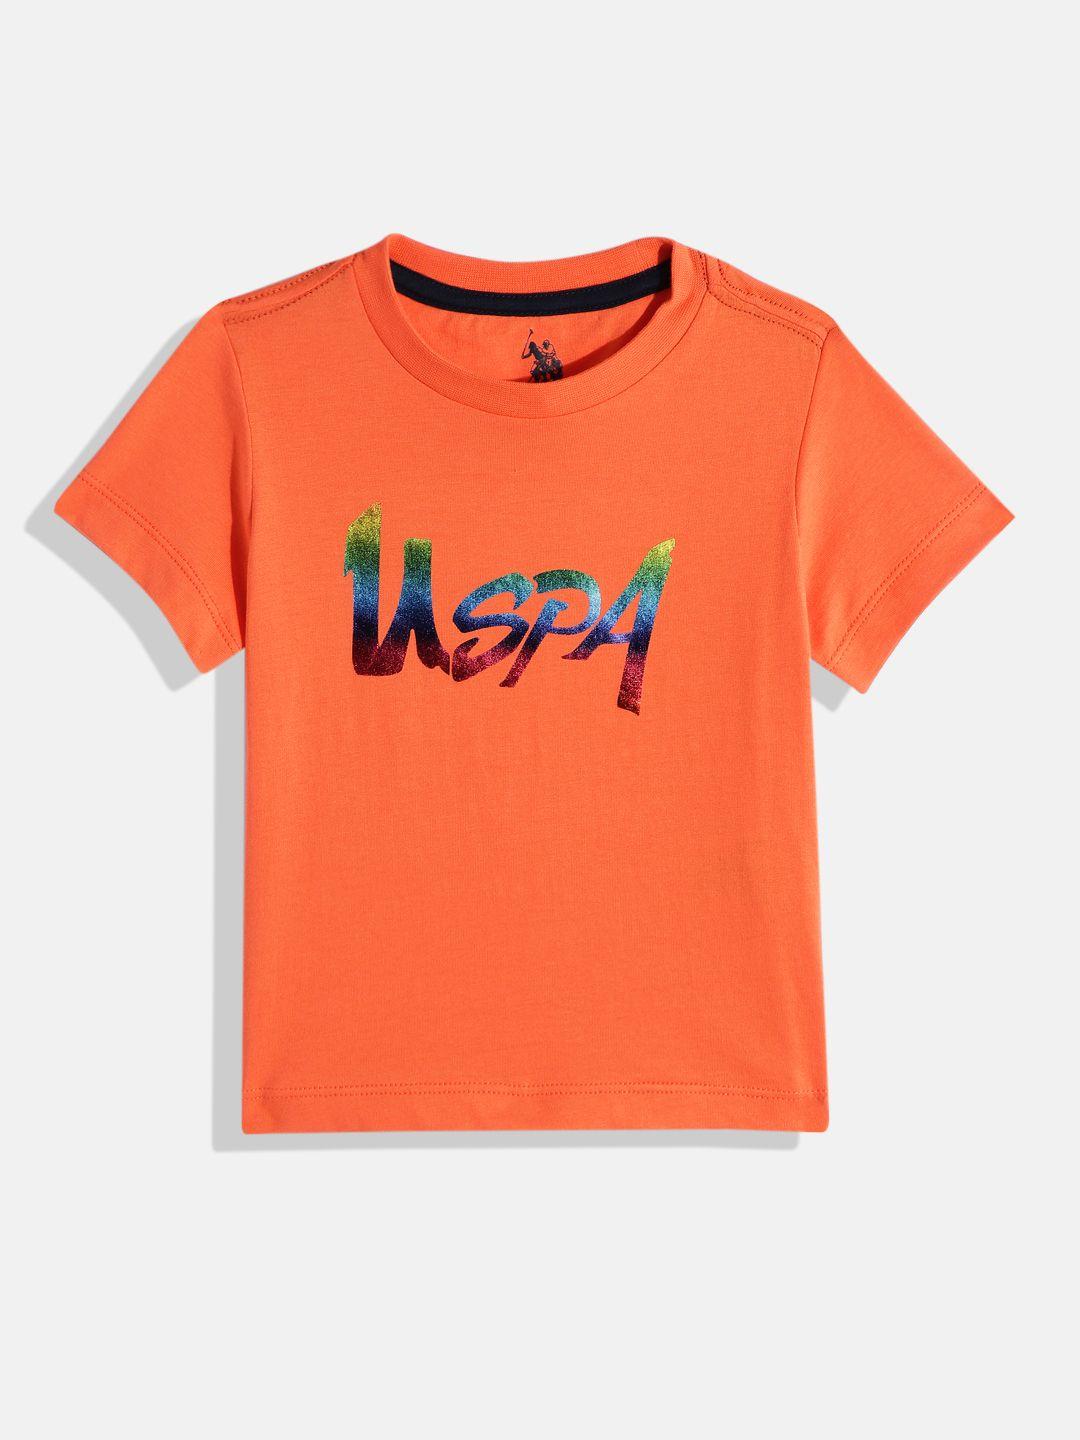 u.s. polo assn. kids boys brand logo foil print knitted pure cotton t-shirt